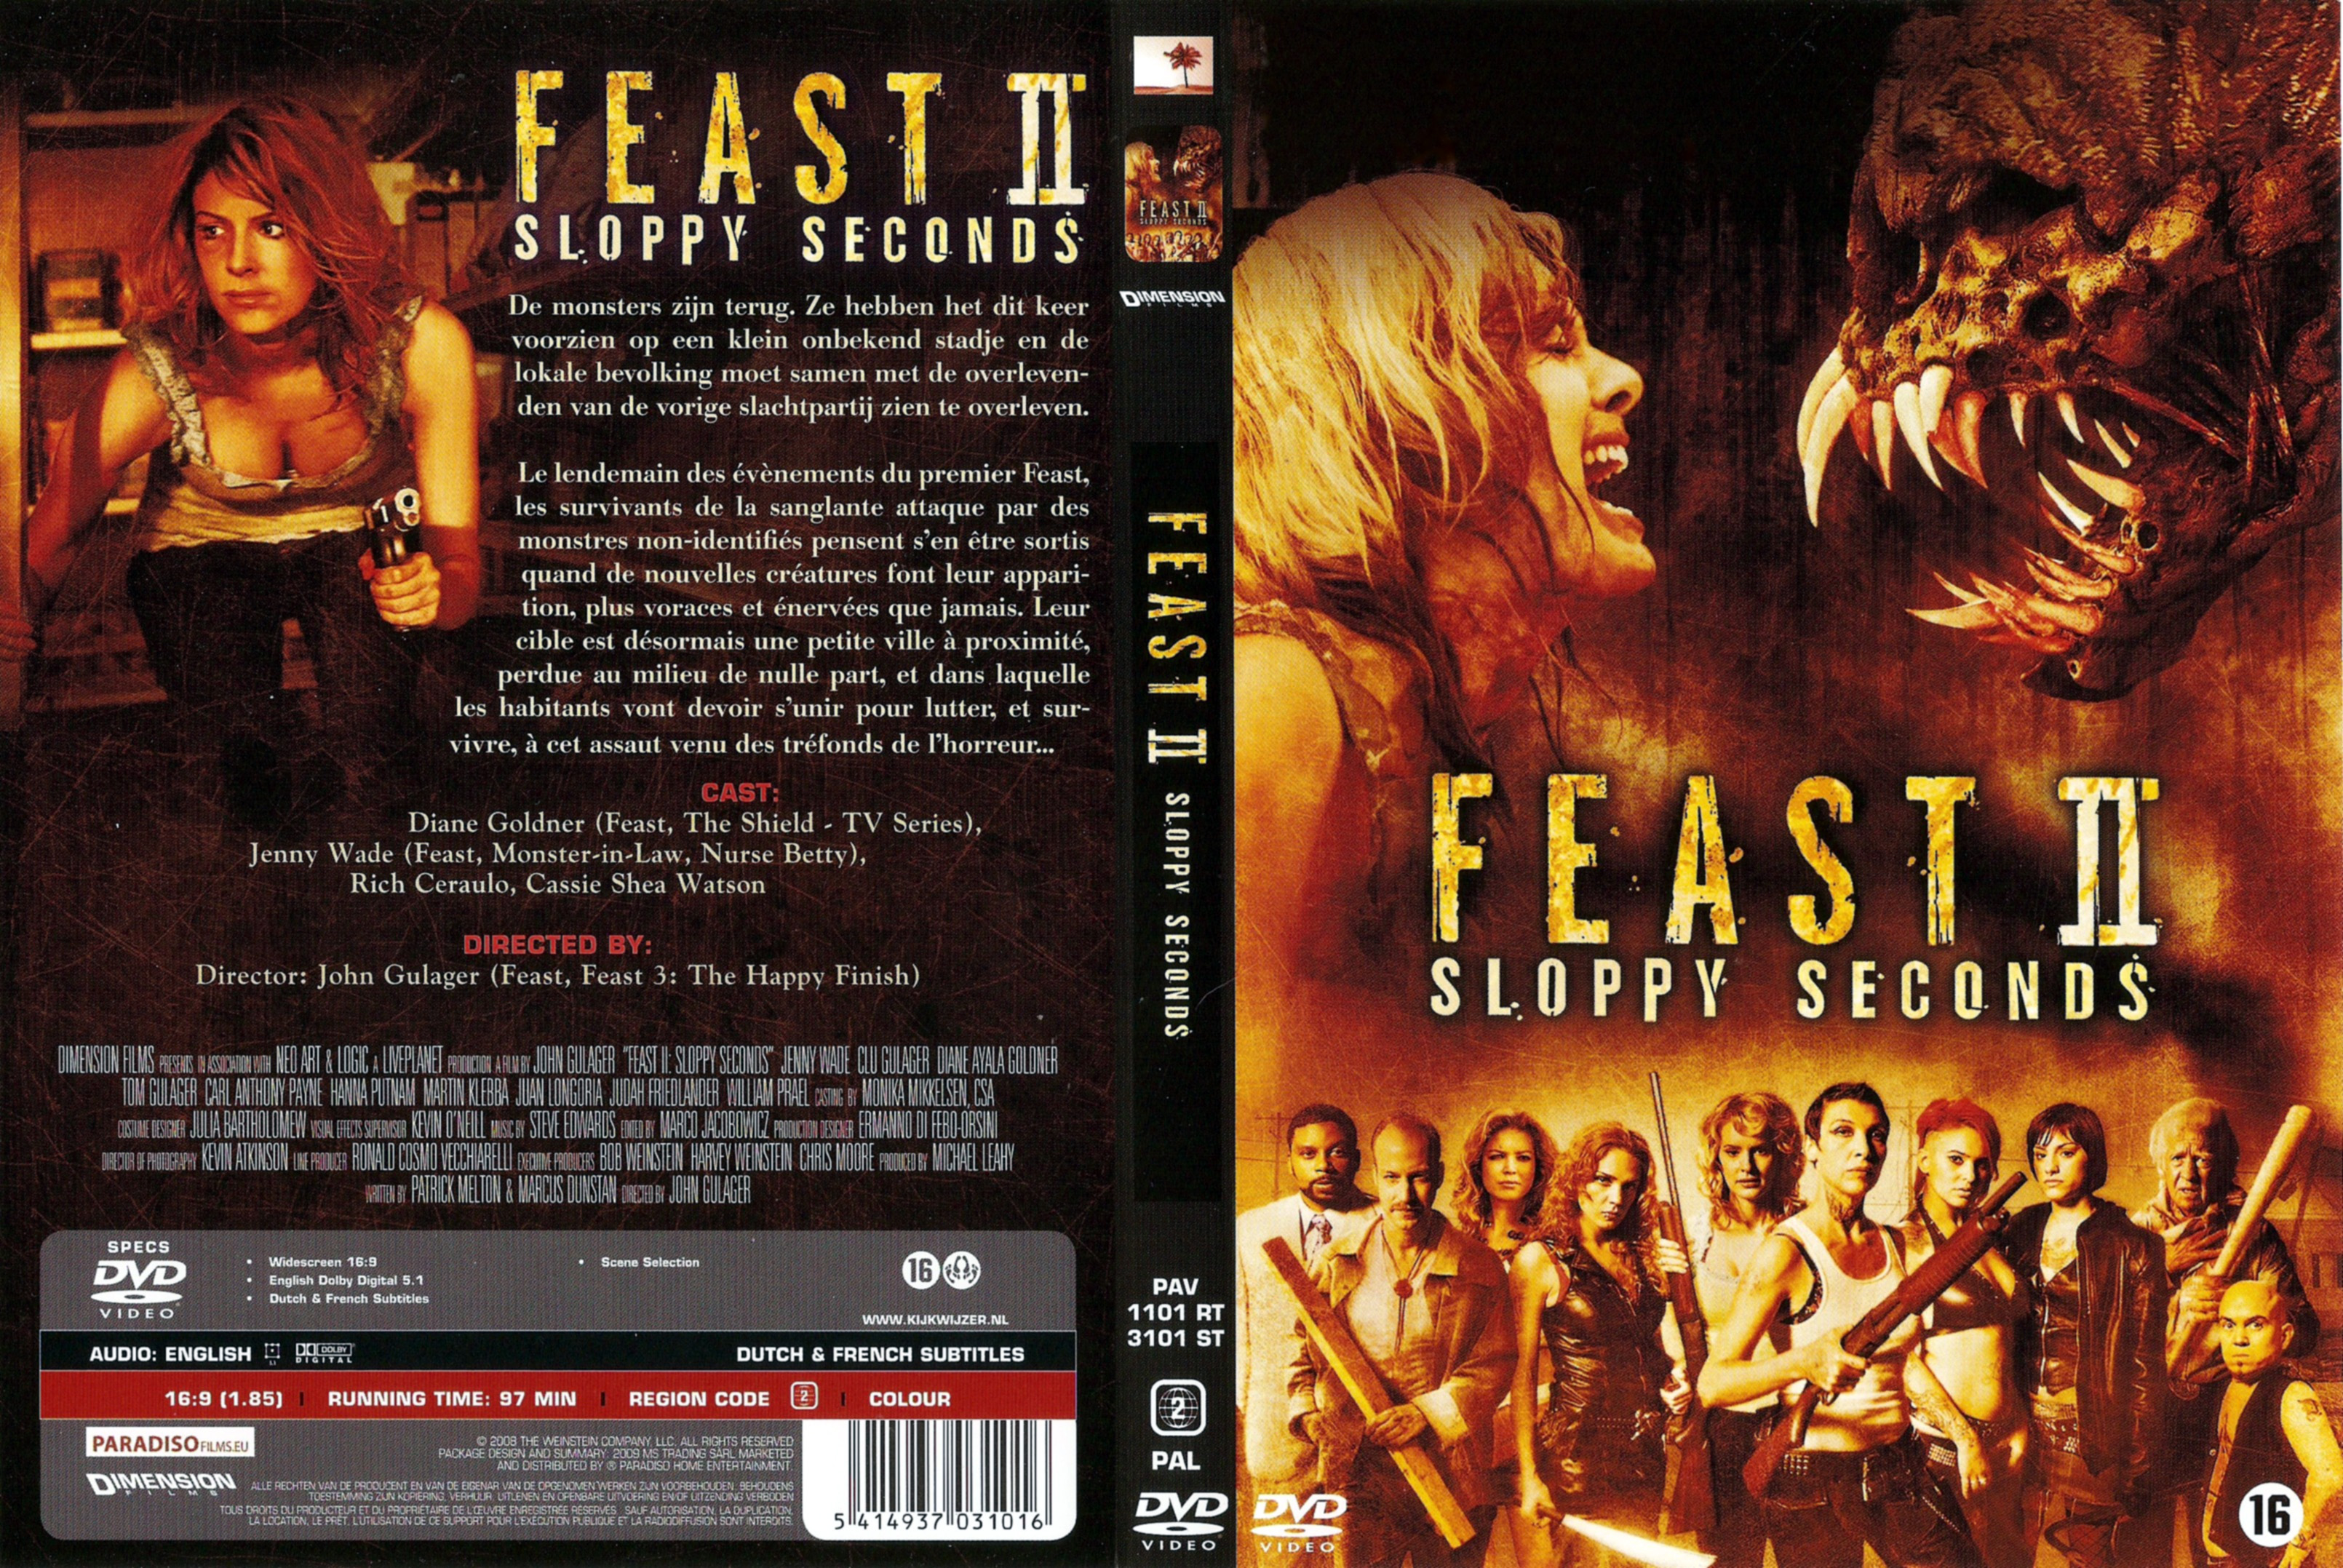 Jaquette DVD Feast 2